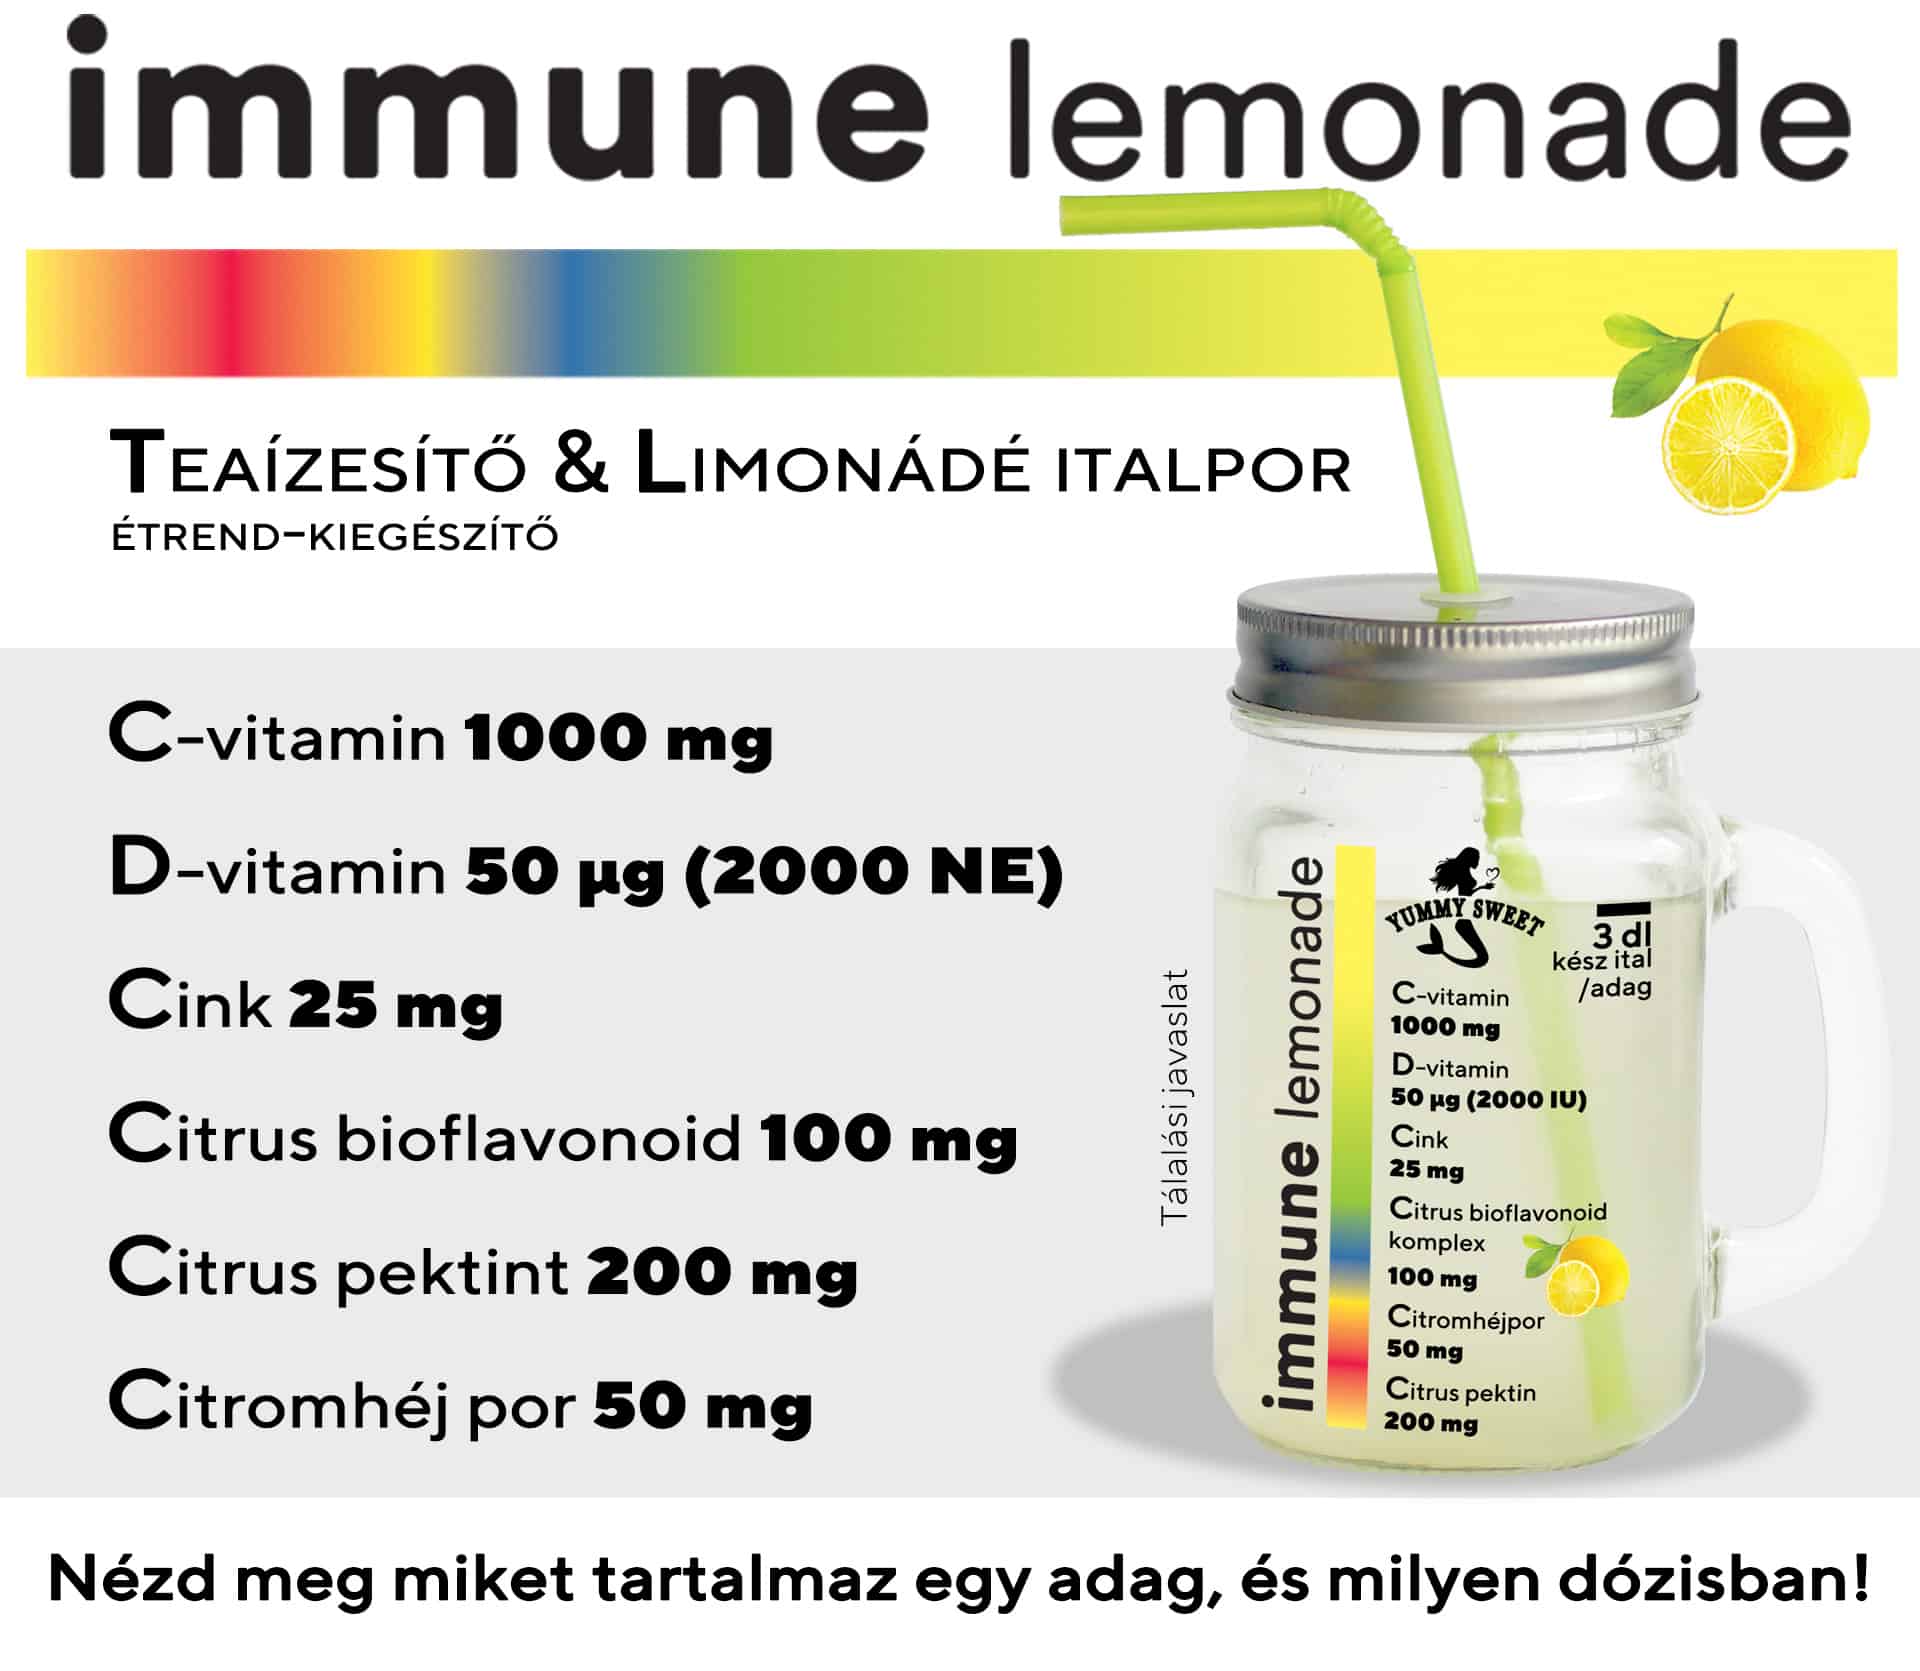 Immune Lemonade, c-vitamin. d-vitamin, cink, bioflavonoid tartalmú immunerősítő teaízesítő és limonádé italpor hatóanyagok